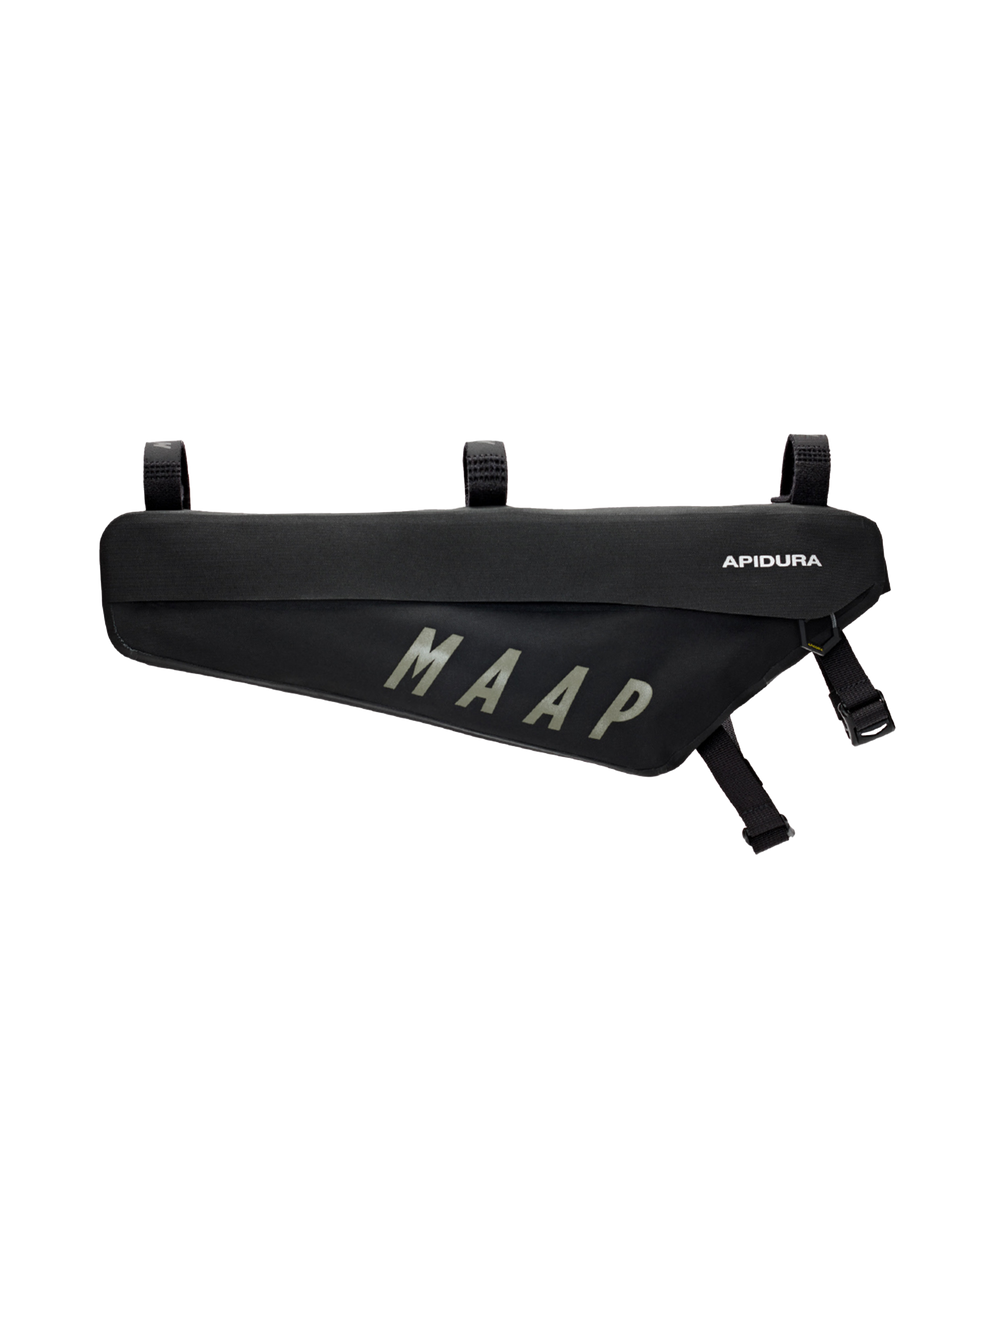 Product Image for MAAP x Apidura Frame Bag